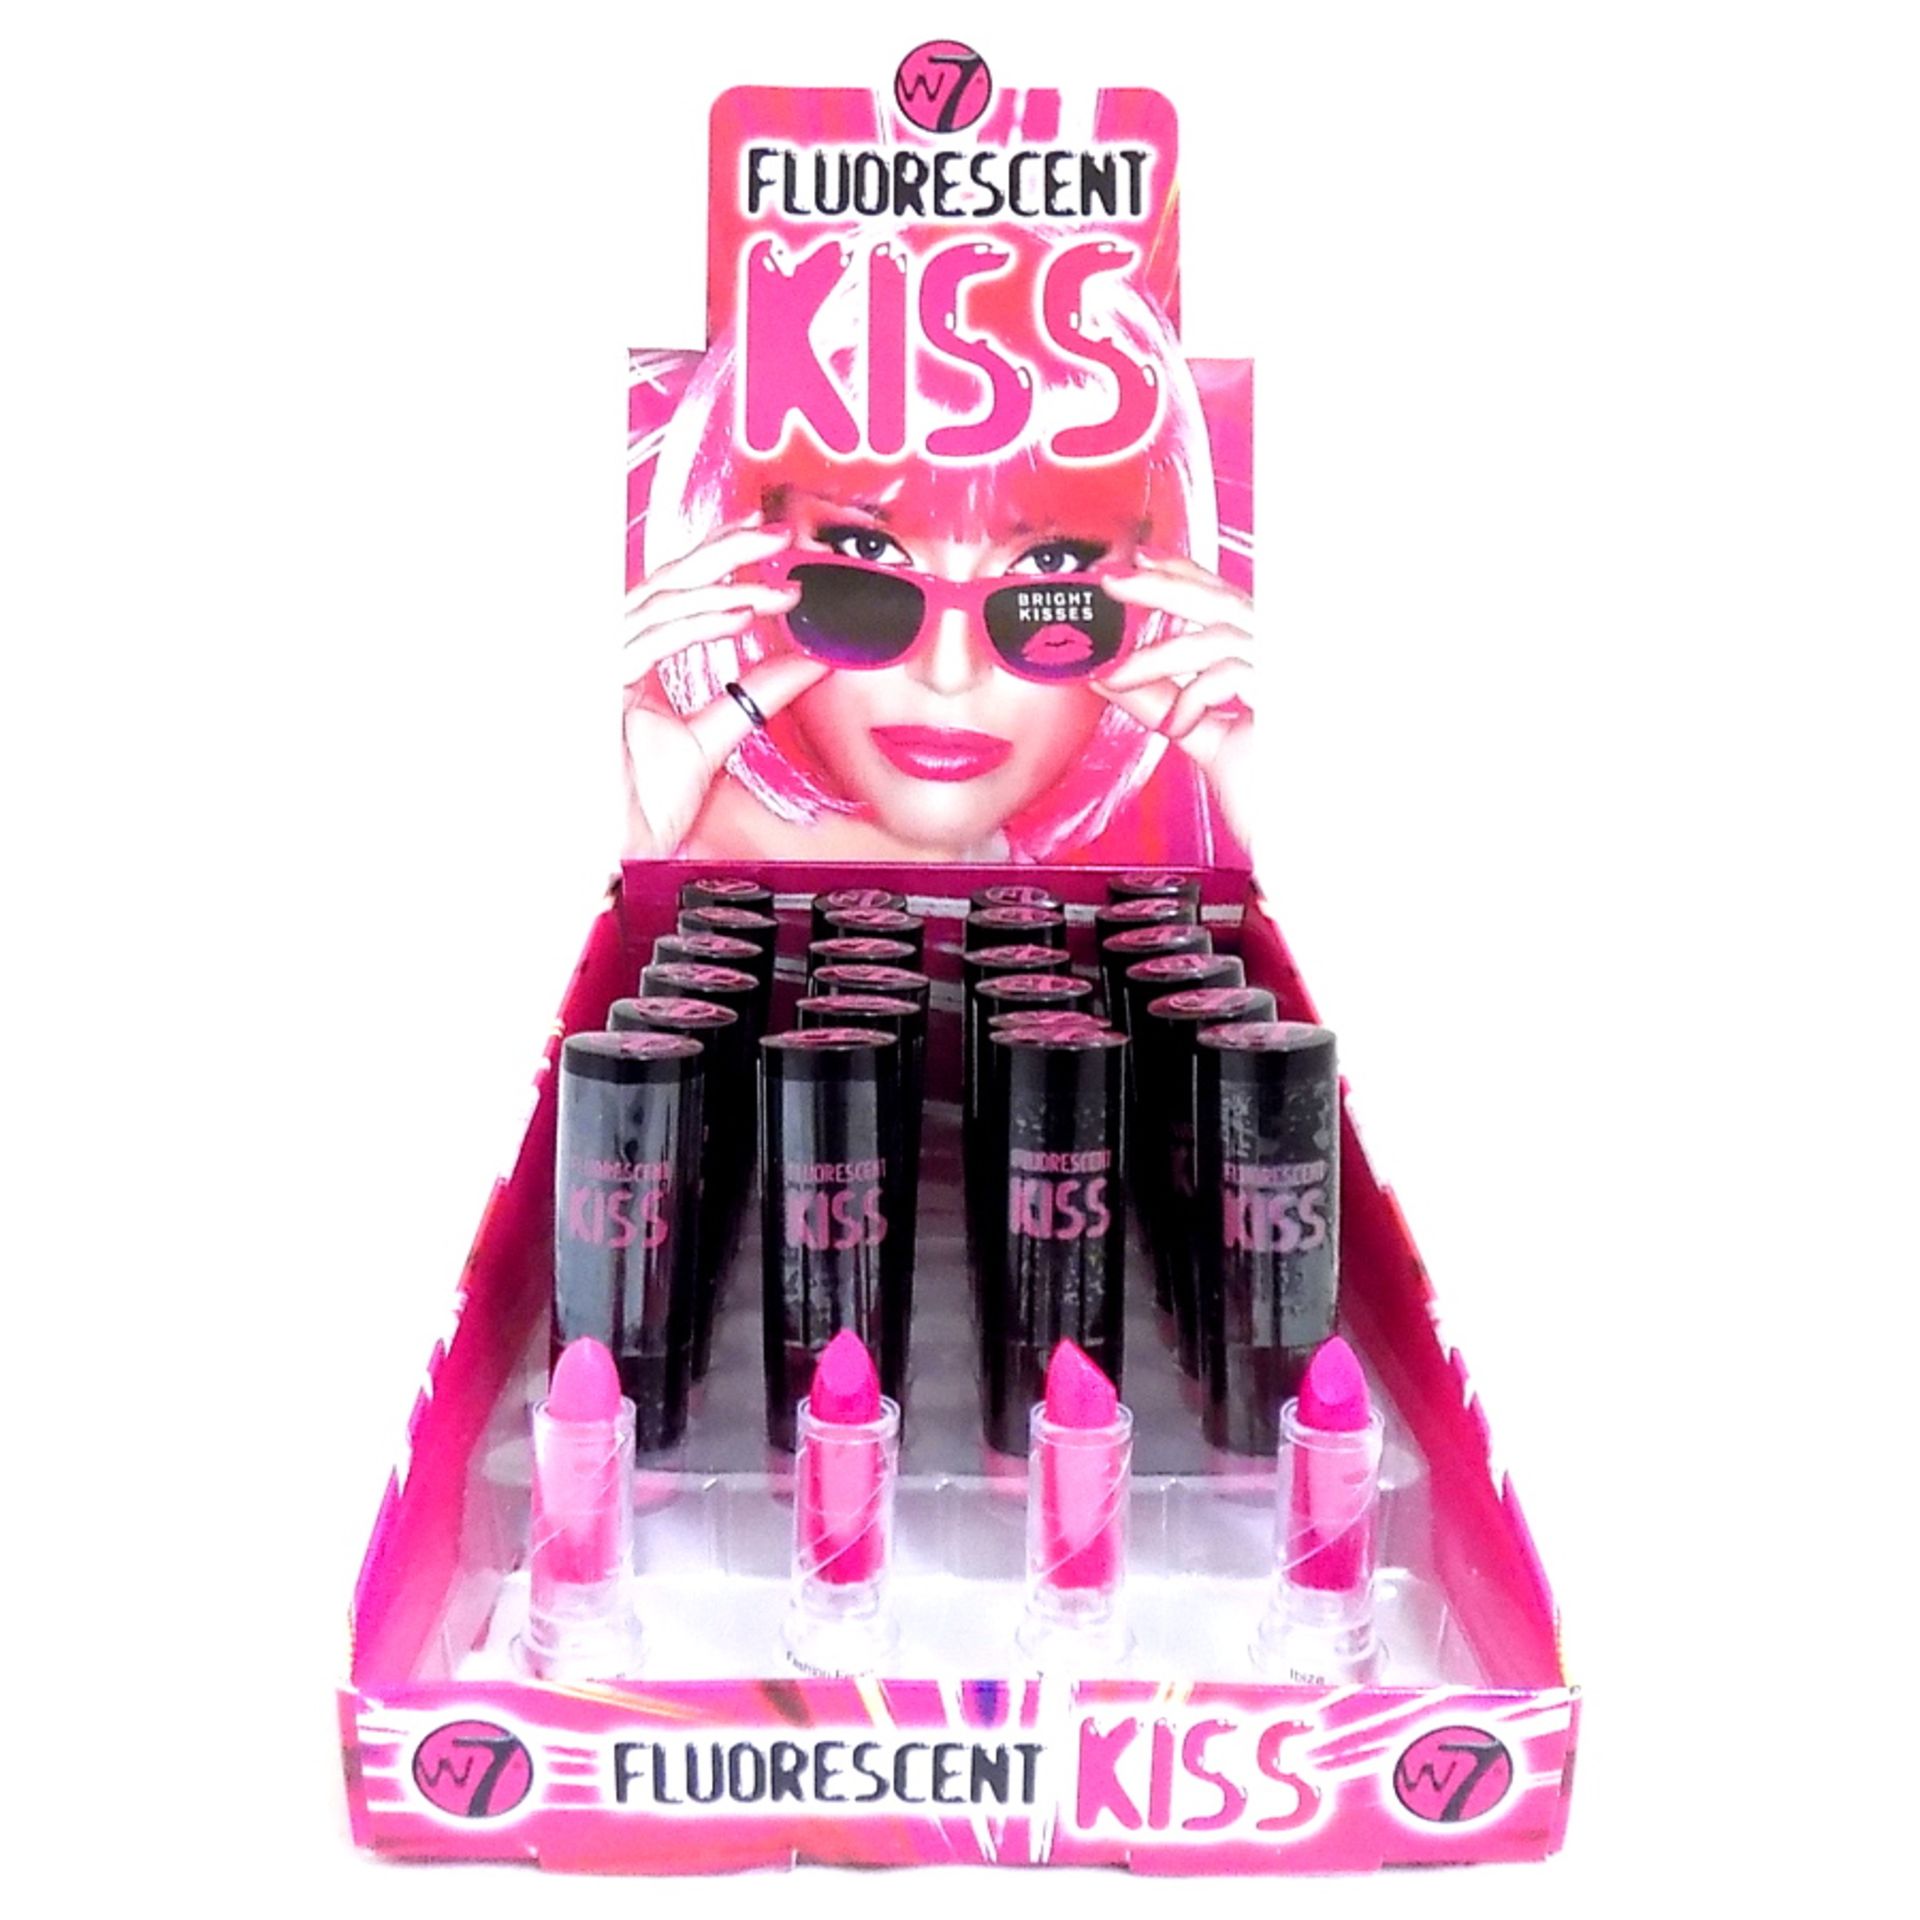 192 W7 Flourescent Kiss Lipstick -in Retail Displays – 4 ShadesUK Delivery £15 – NO VAT